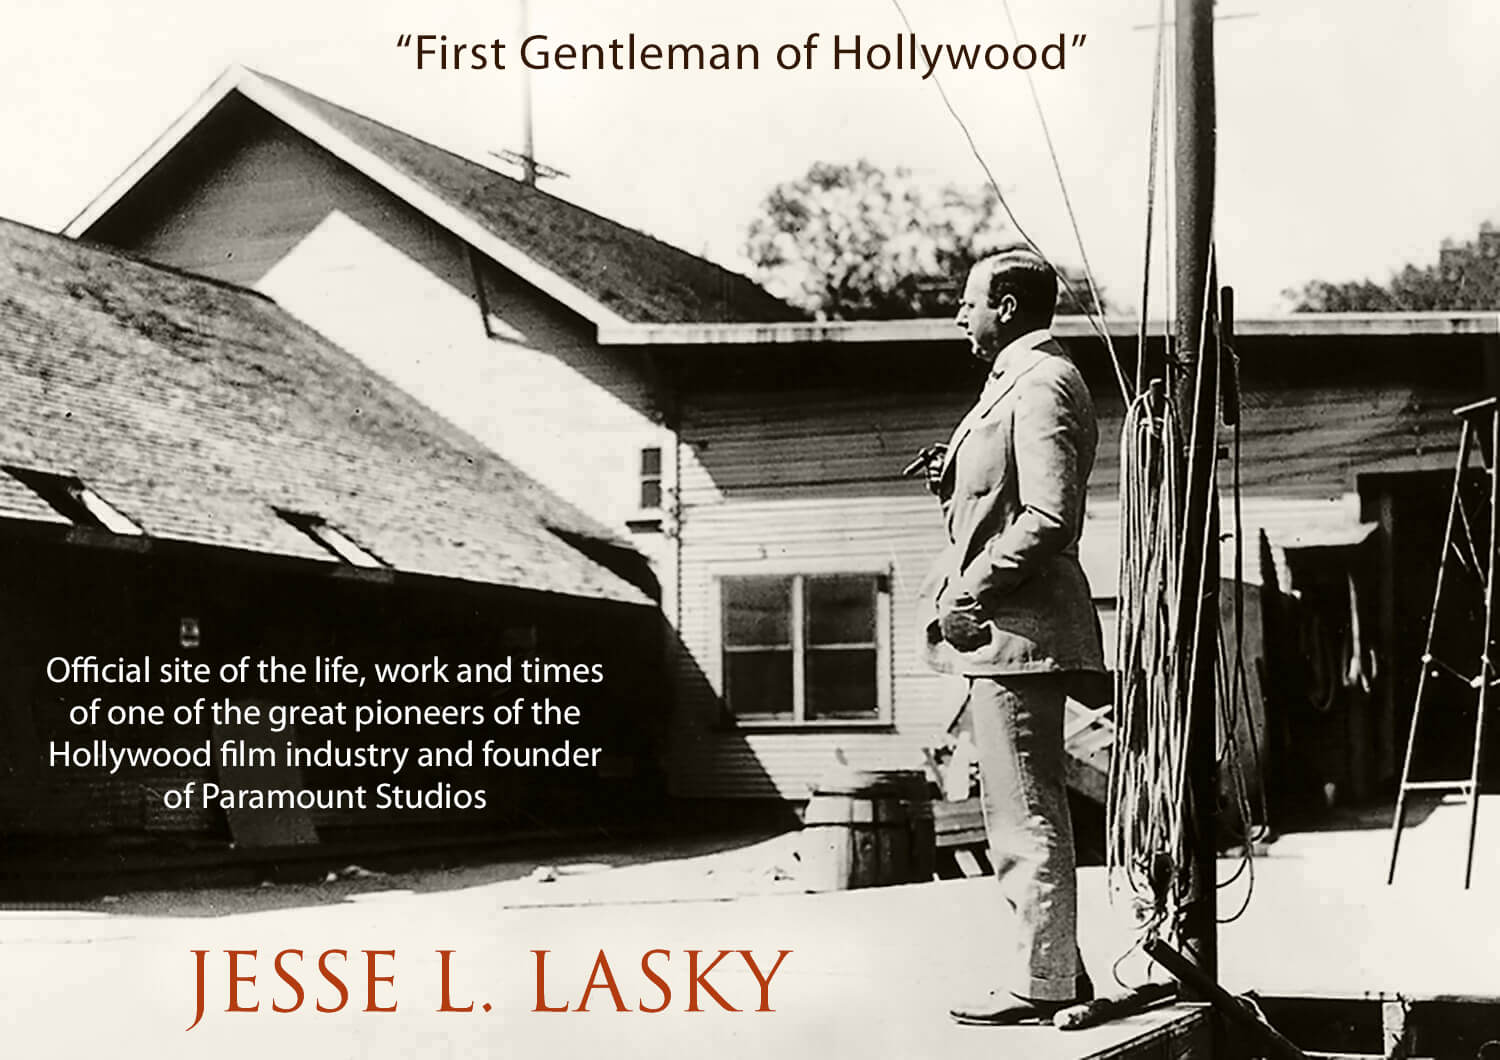 Jesse L. Lasky - First Gentleman of Hollywood